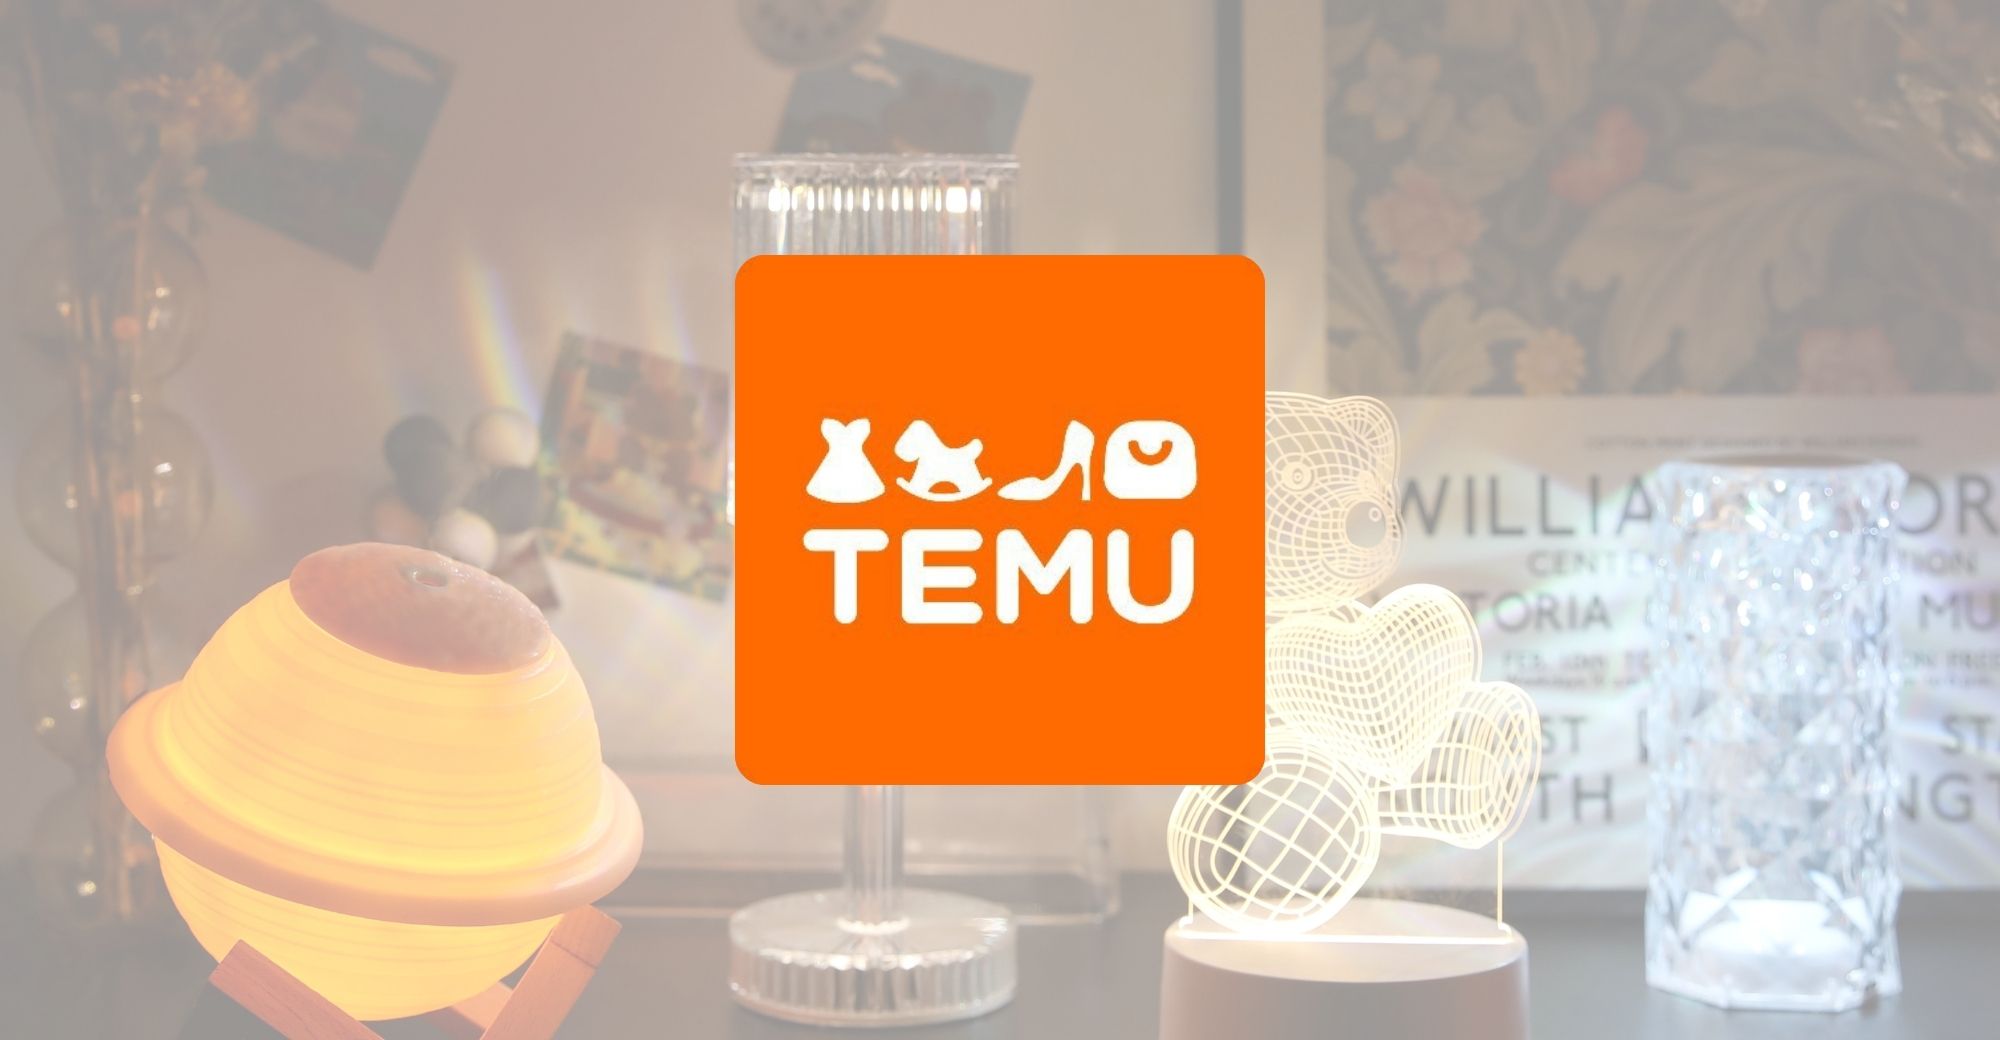 Temu Surpasses Quarterly GMV of $5 Billion, Potentially Exceeding Annual Targets